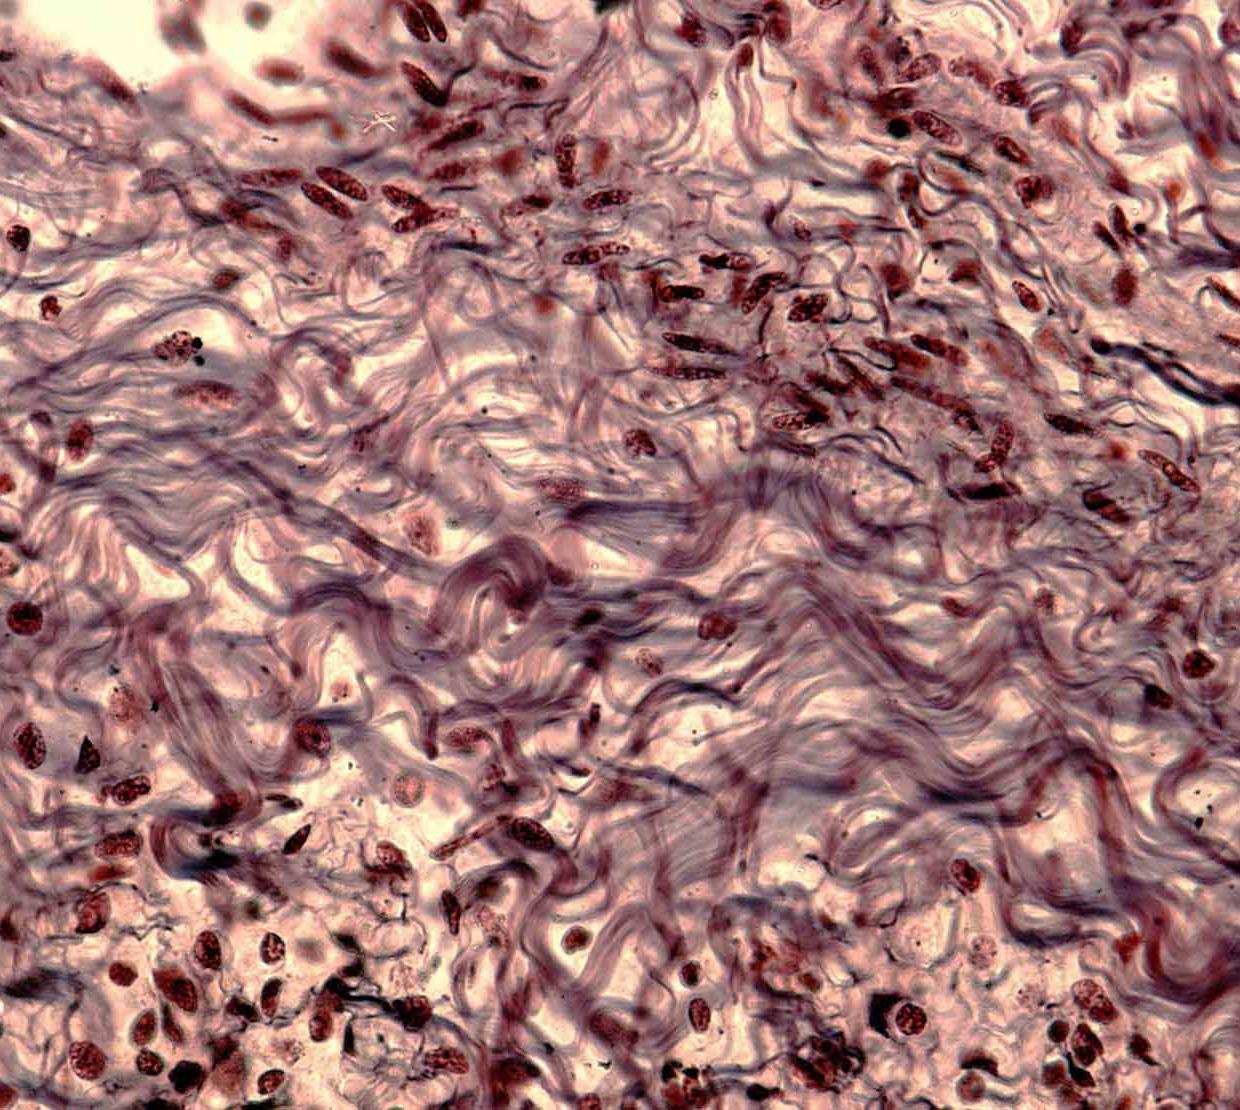 microscopic collagen fibers